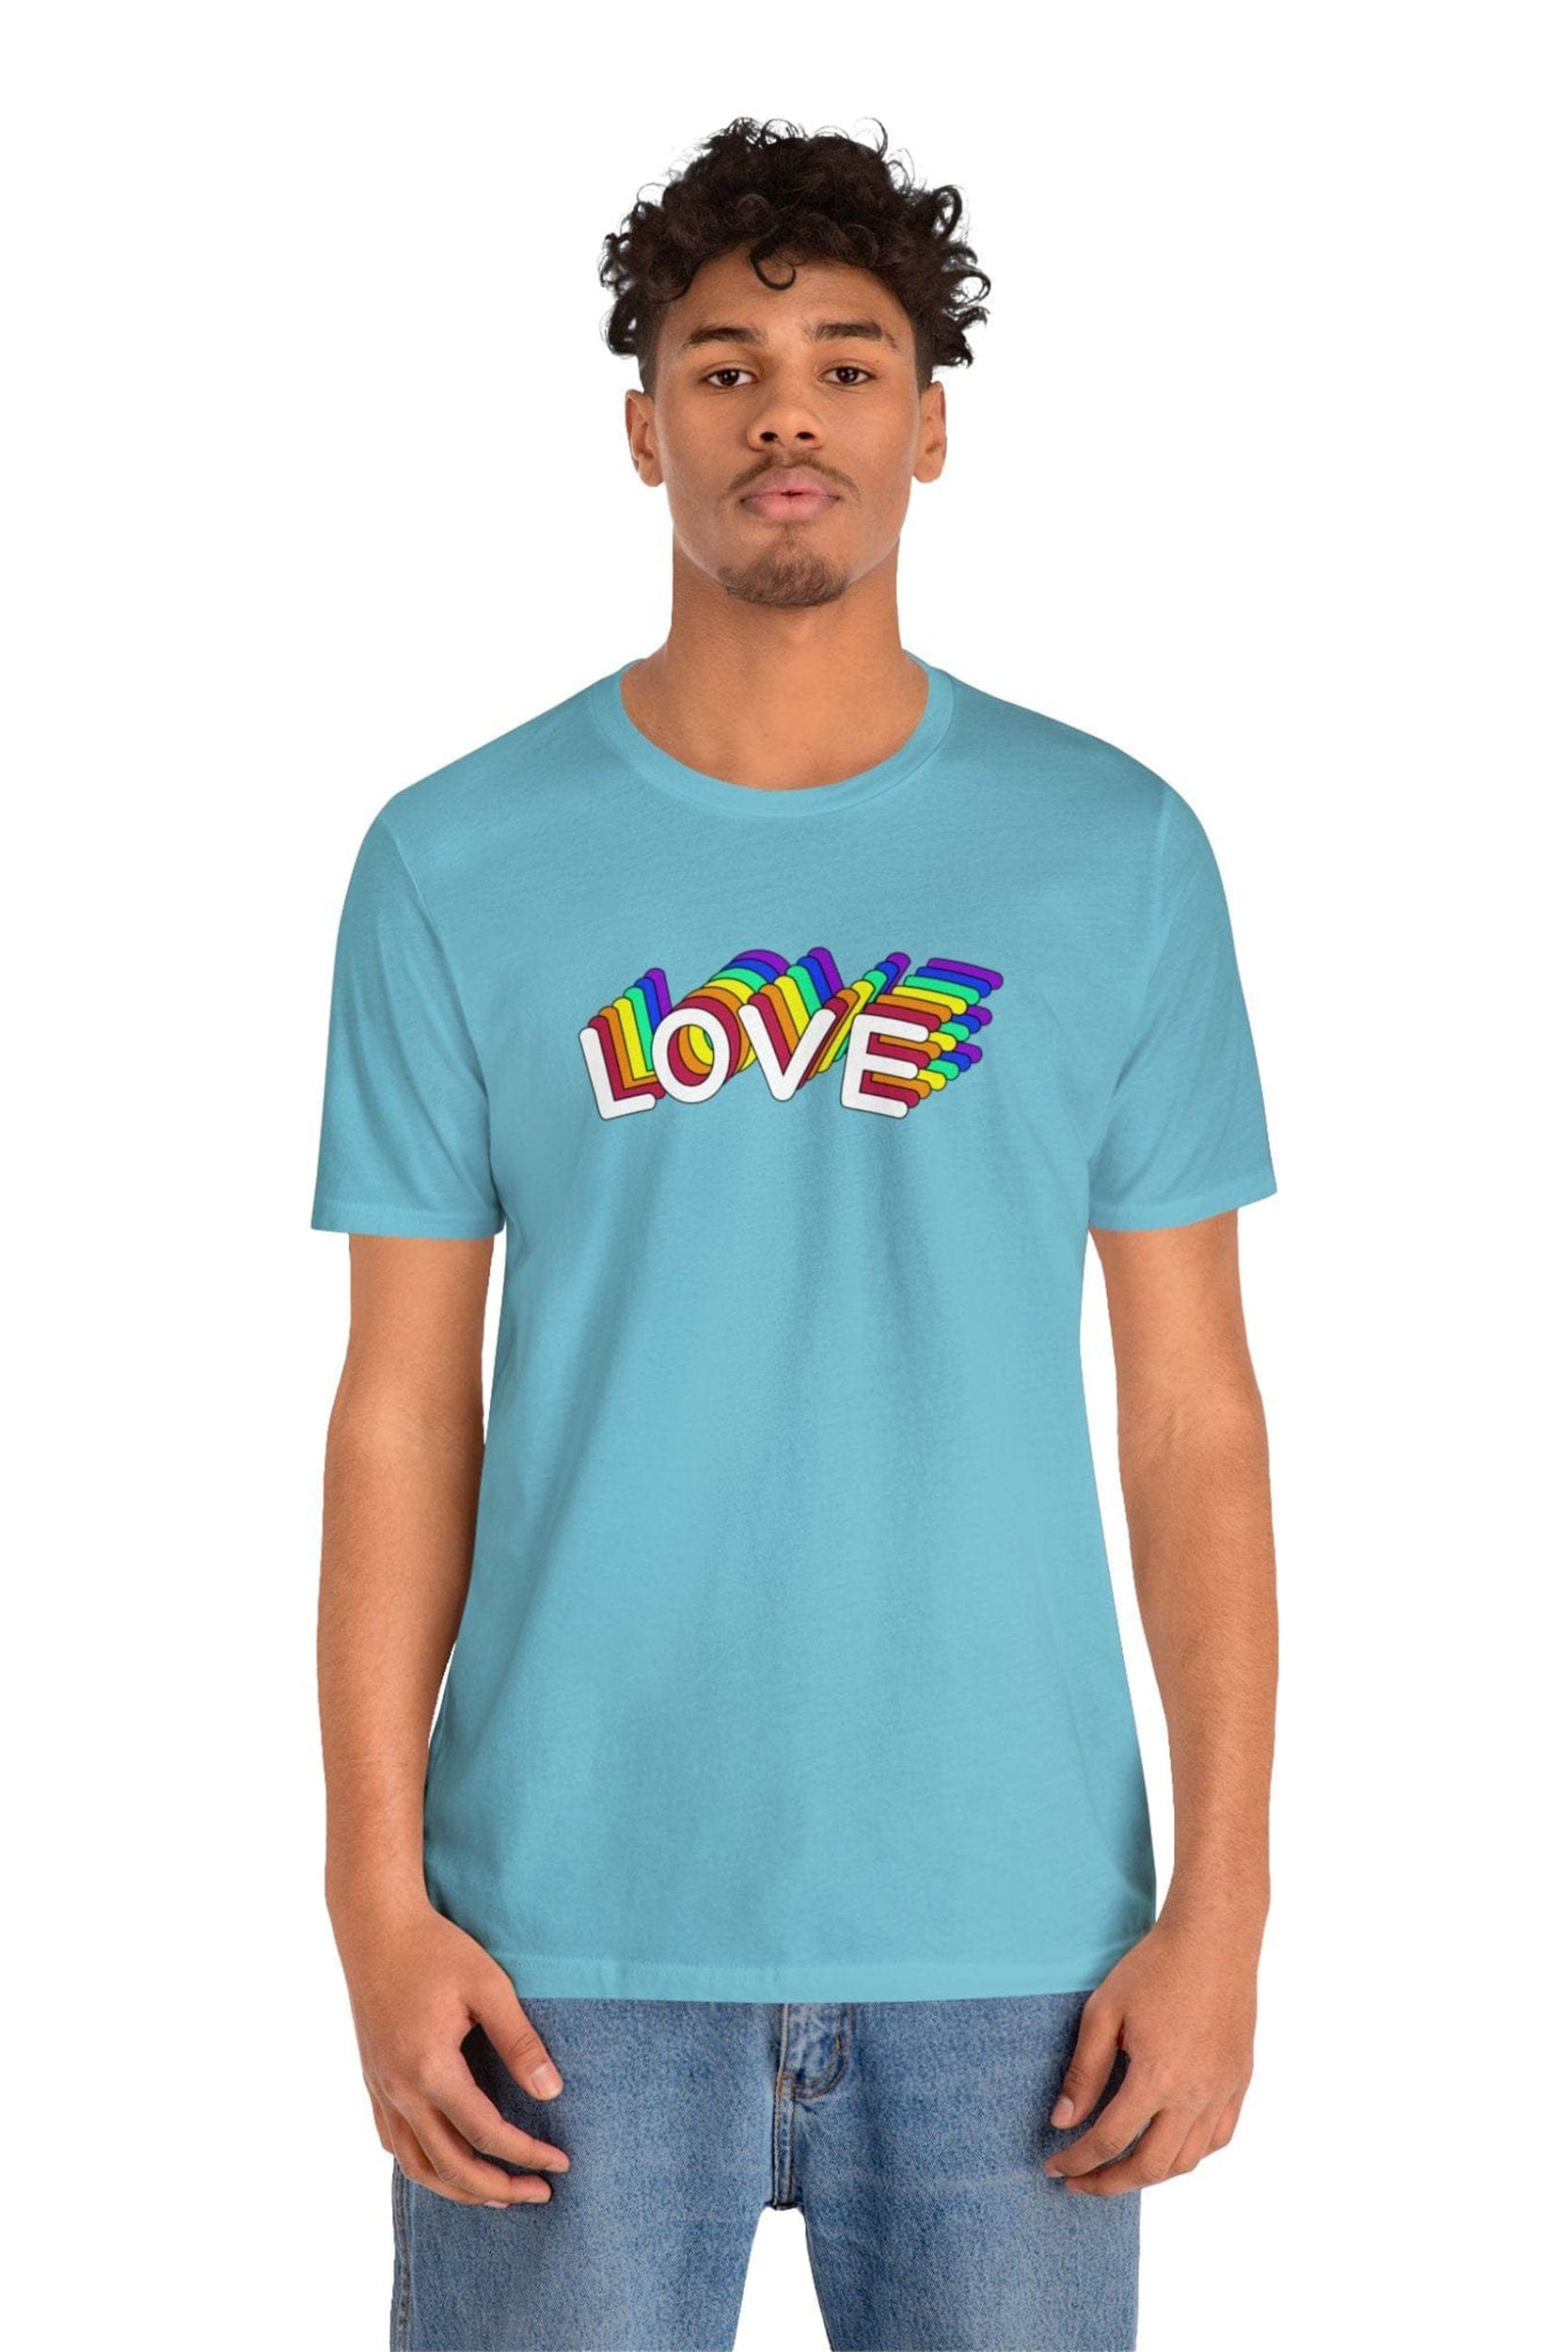 "LOVE" T-Shirt